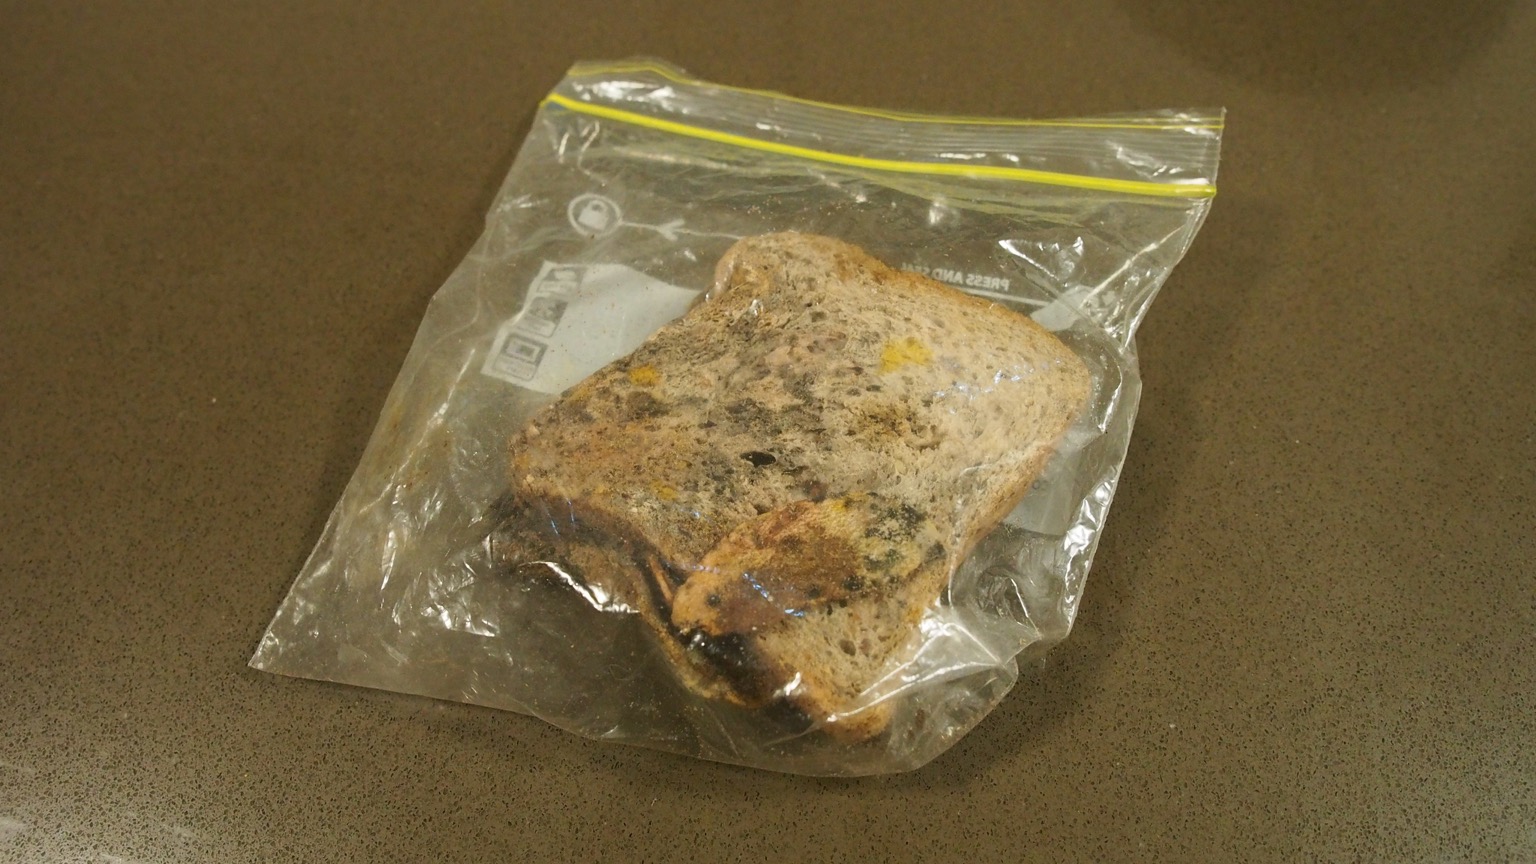 Mouldy crisp sandwich in a plastic bag